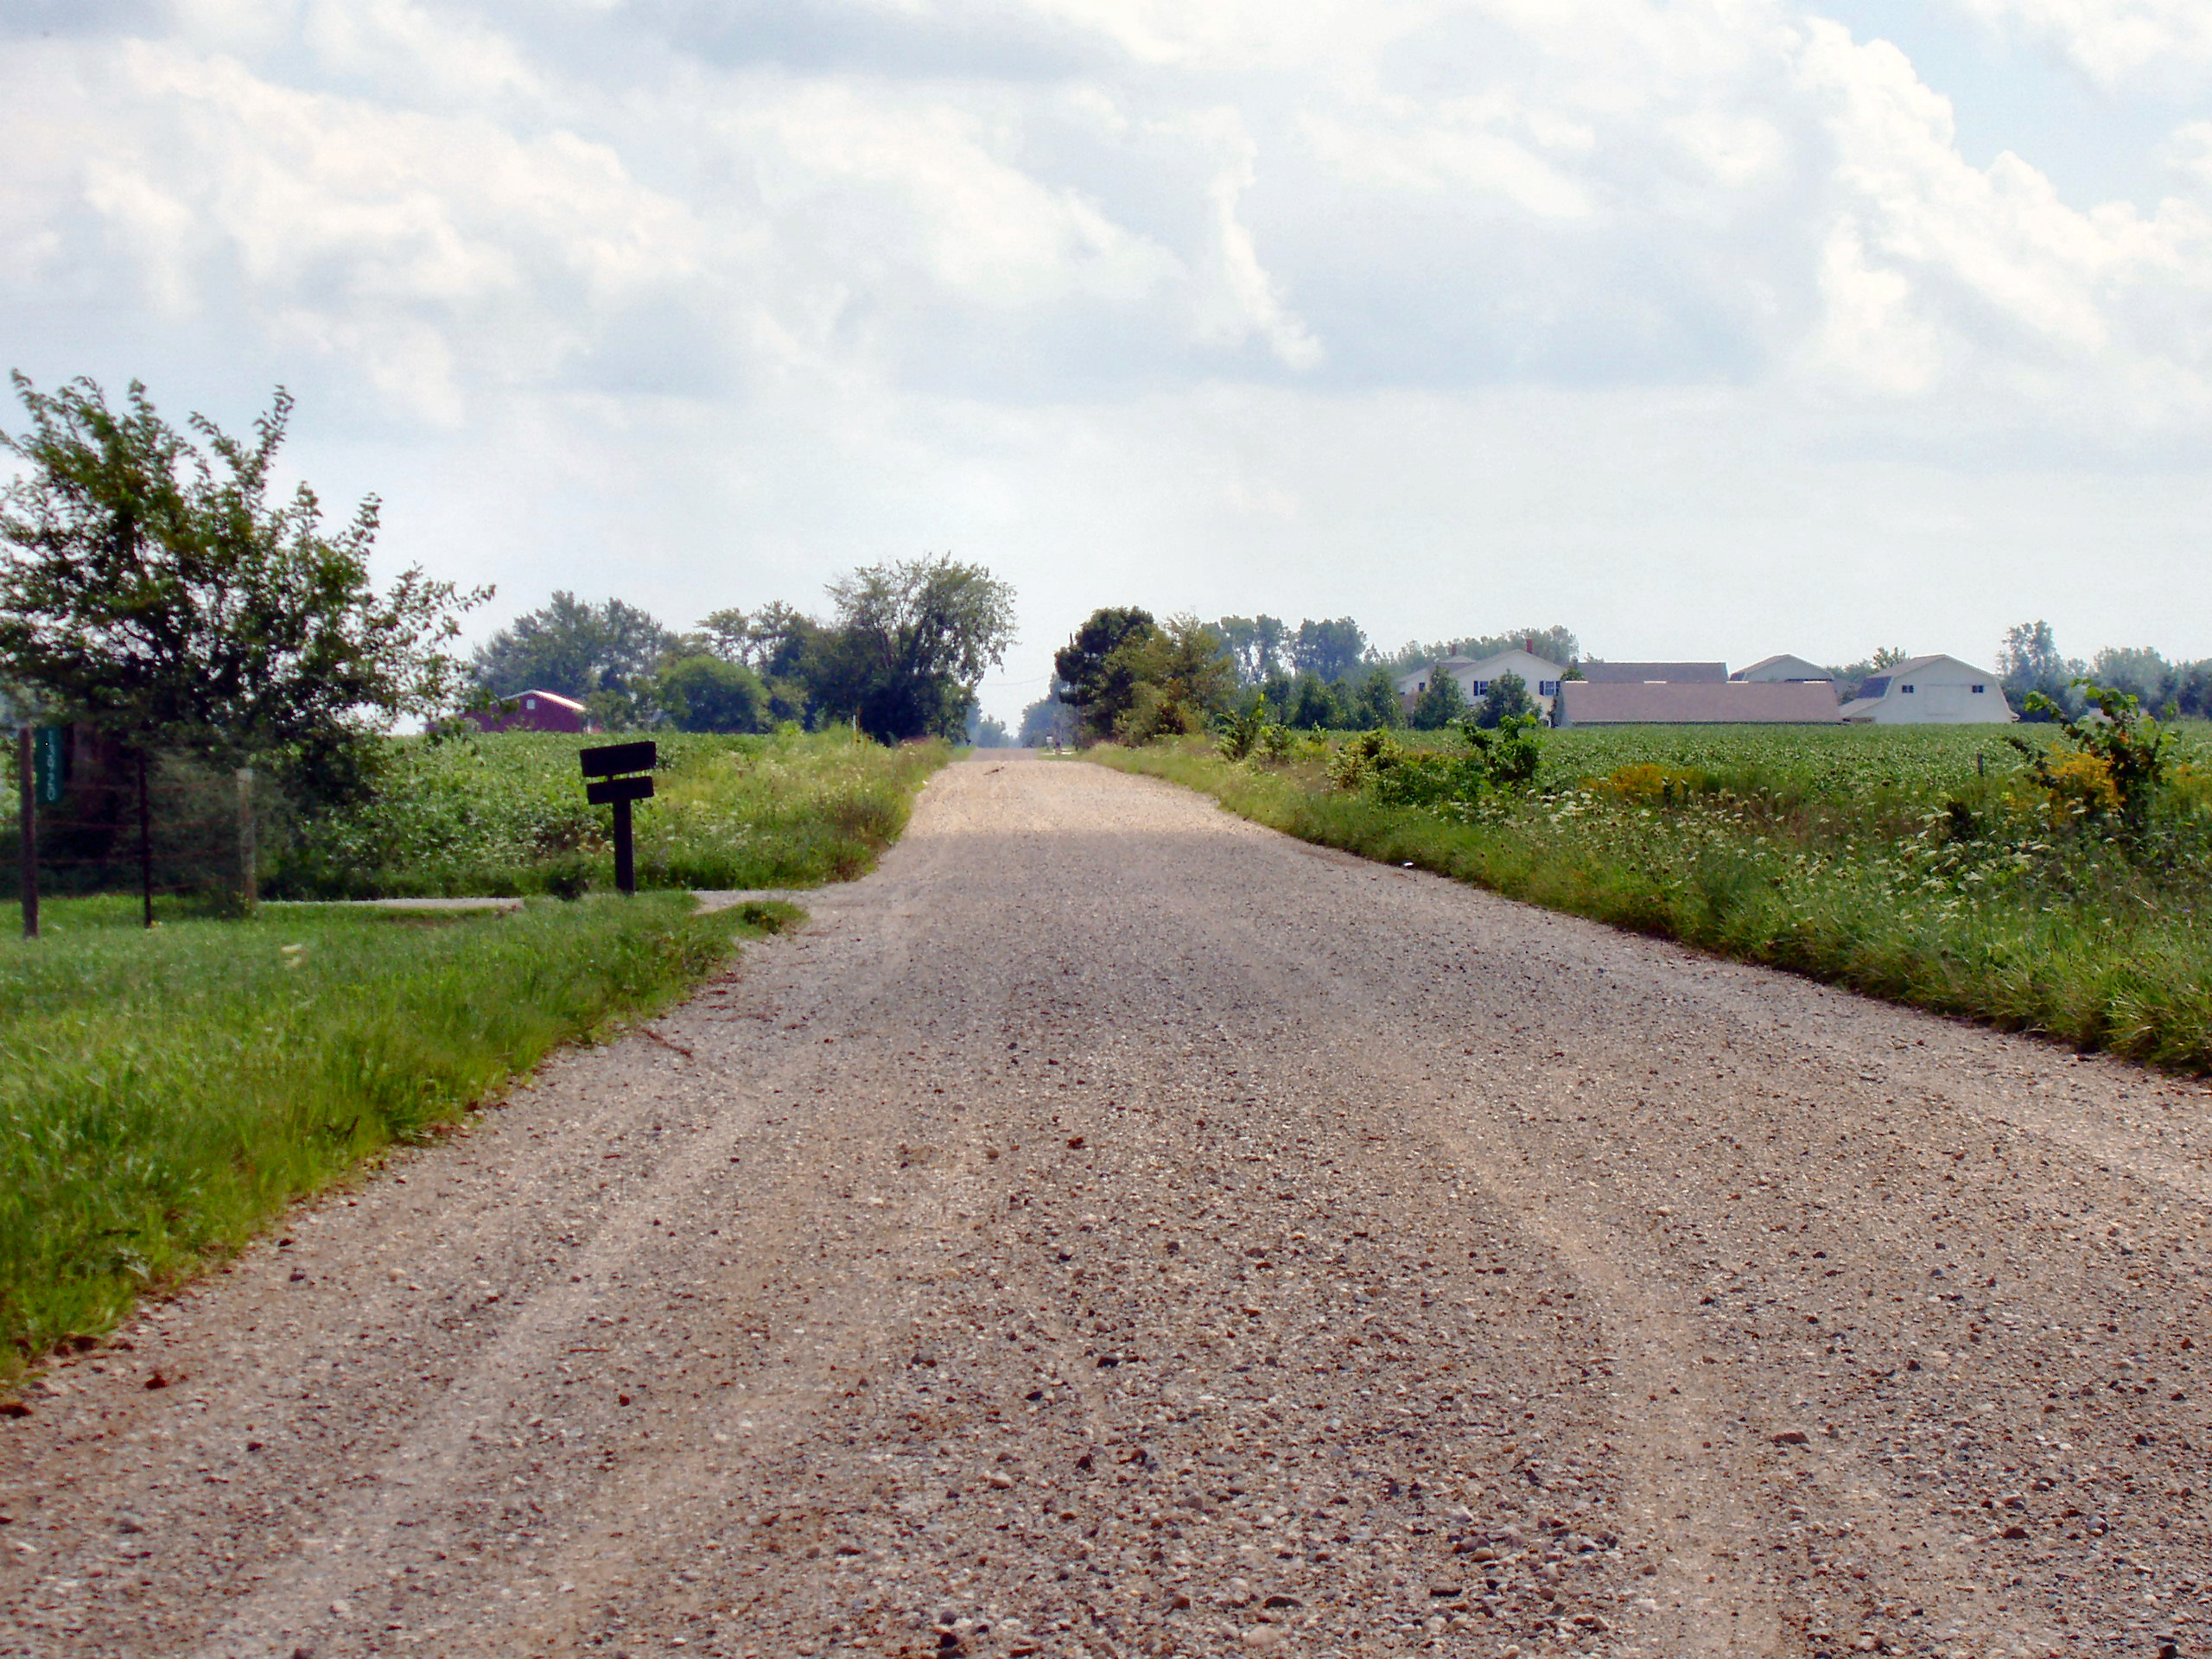 File:Indiana-rural-road-dirt.jpg - Wikimedia Commons